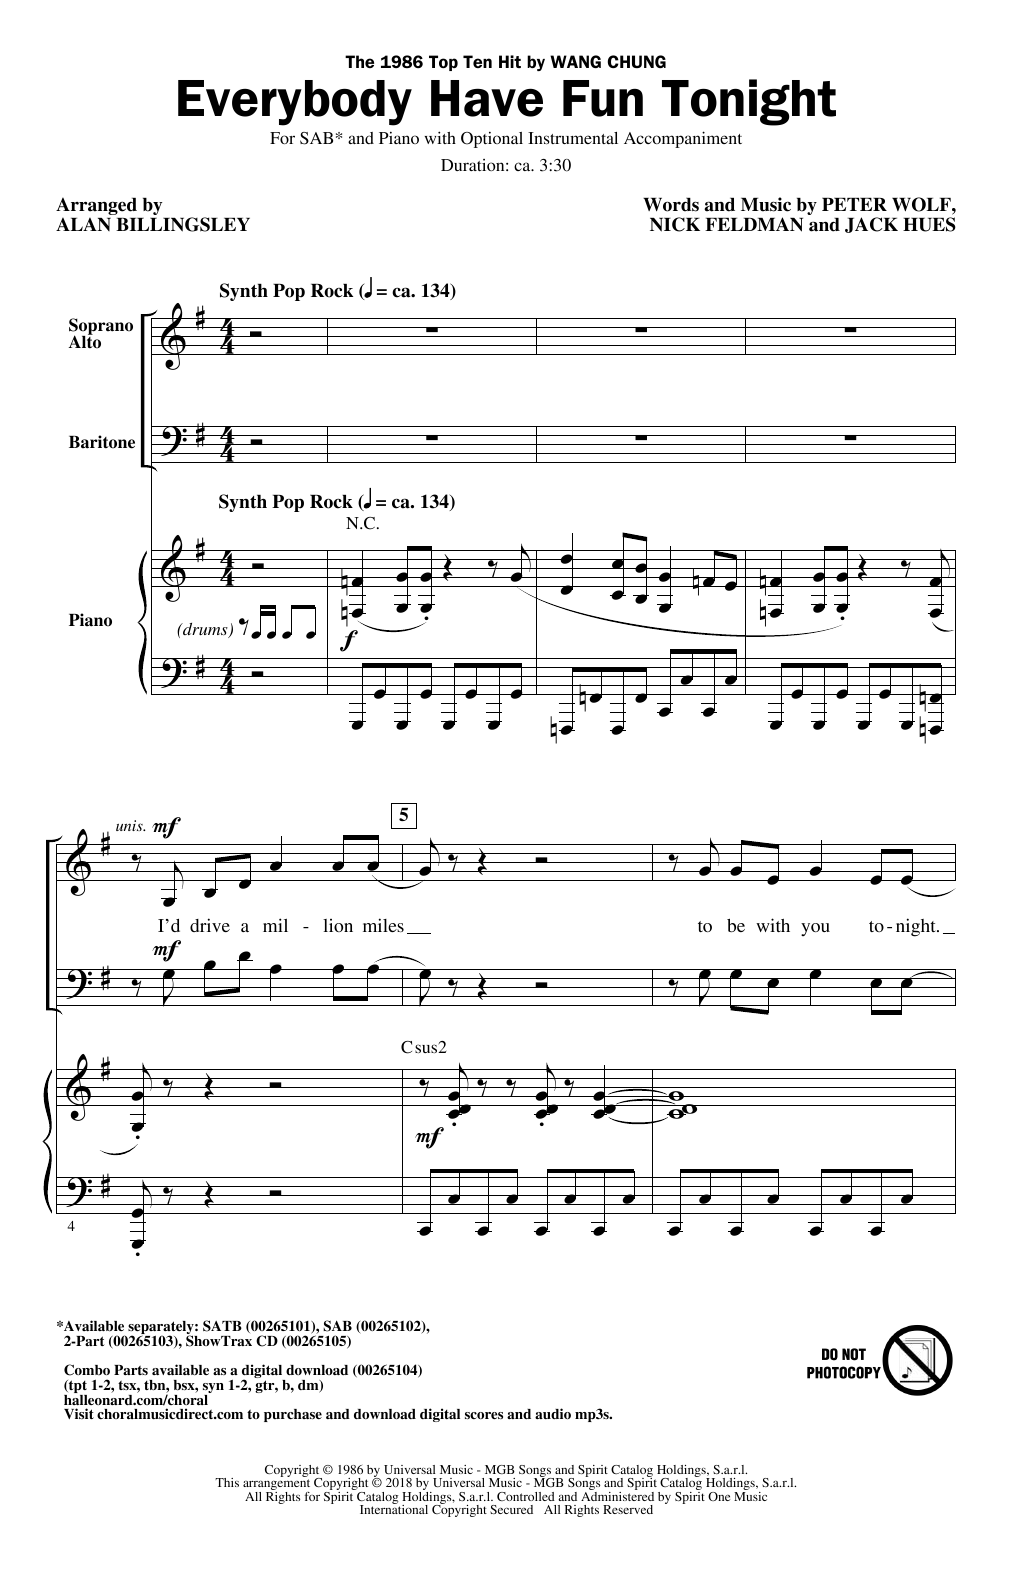 Wang Chung Everybody Have Fun Tonight (arr. Alan Billingsley) Sheet Music Notes & Chords for SATB - Download or Print PDF